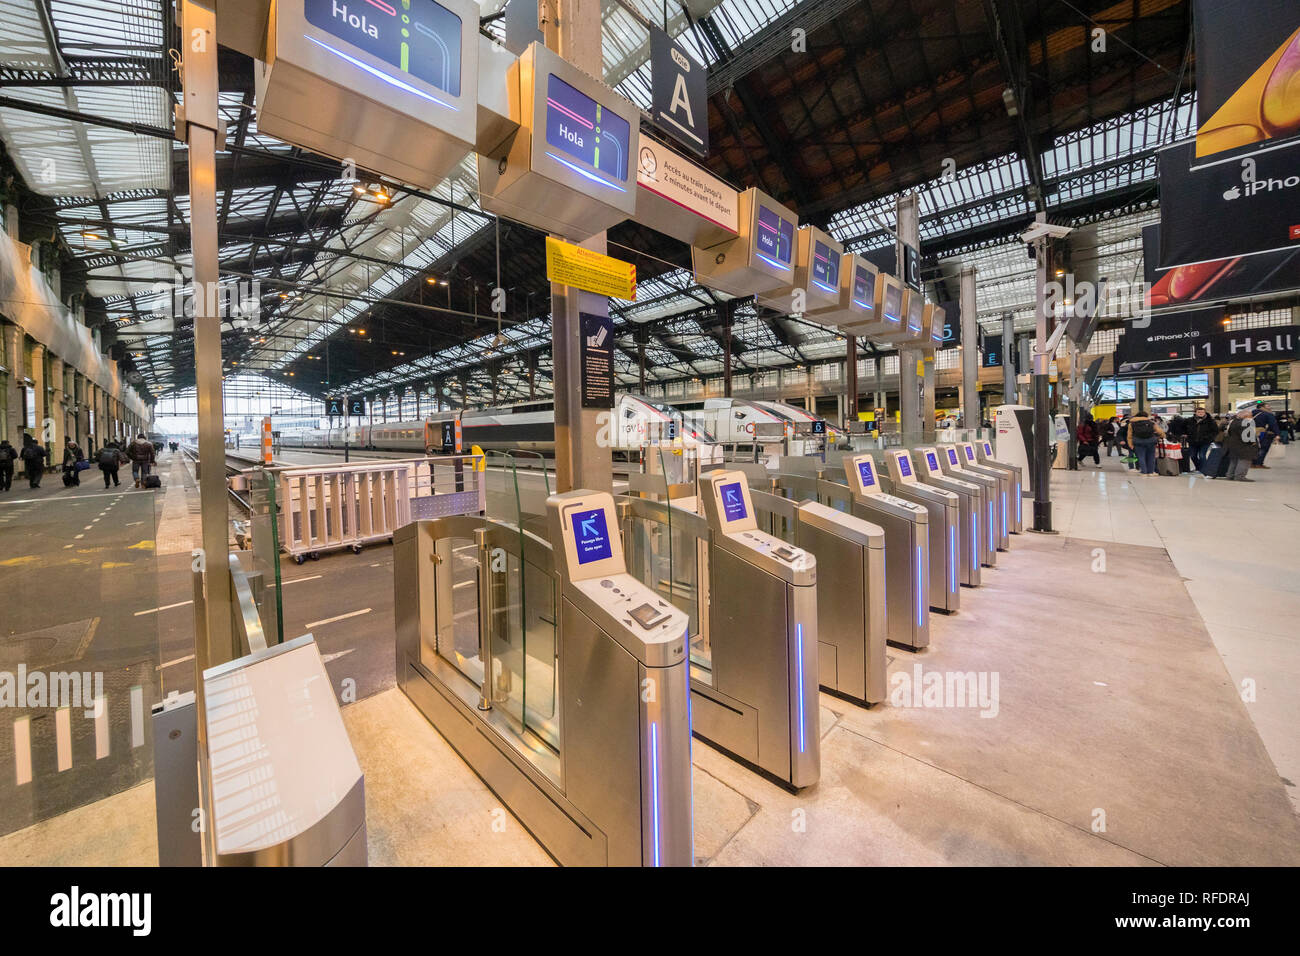 France, Paris, Gare de Lyon, January 2019: Security gates before the boarding area. Stock Photo